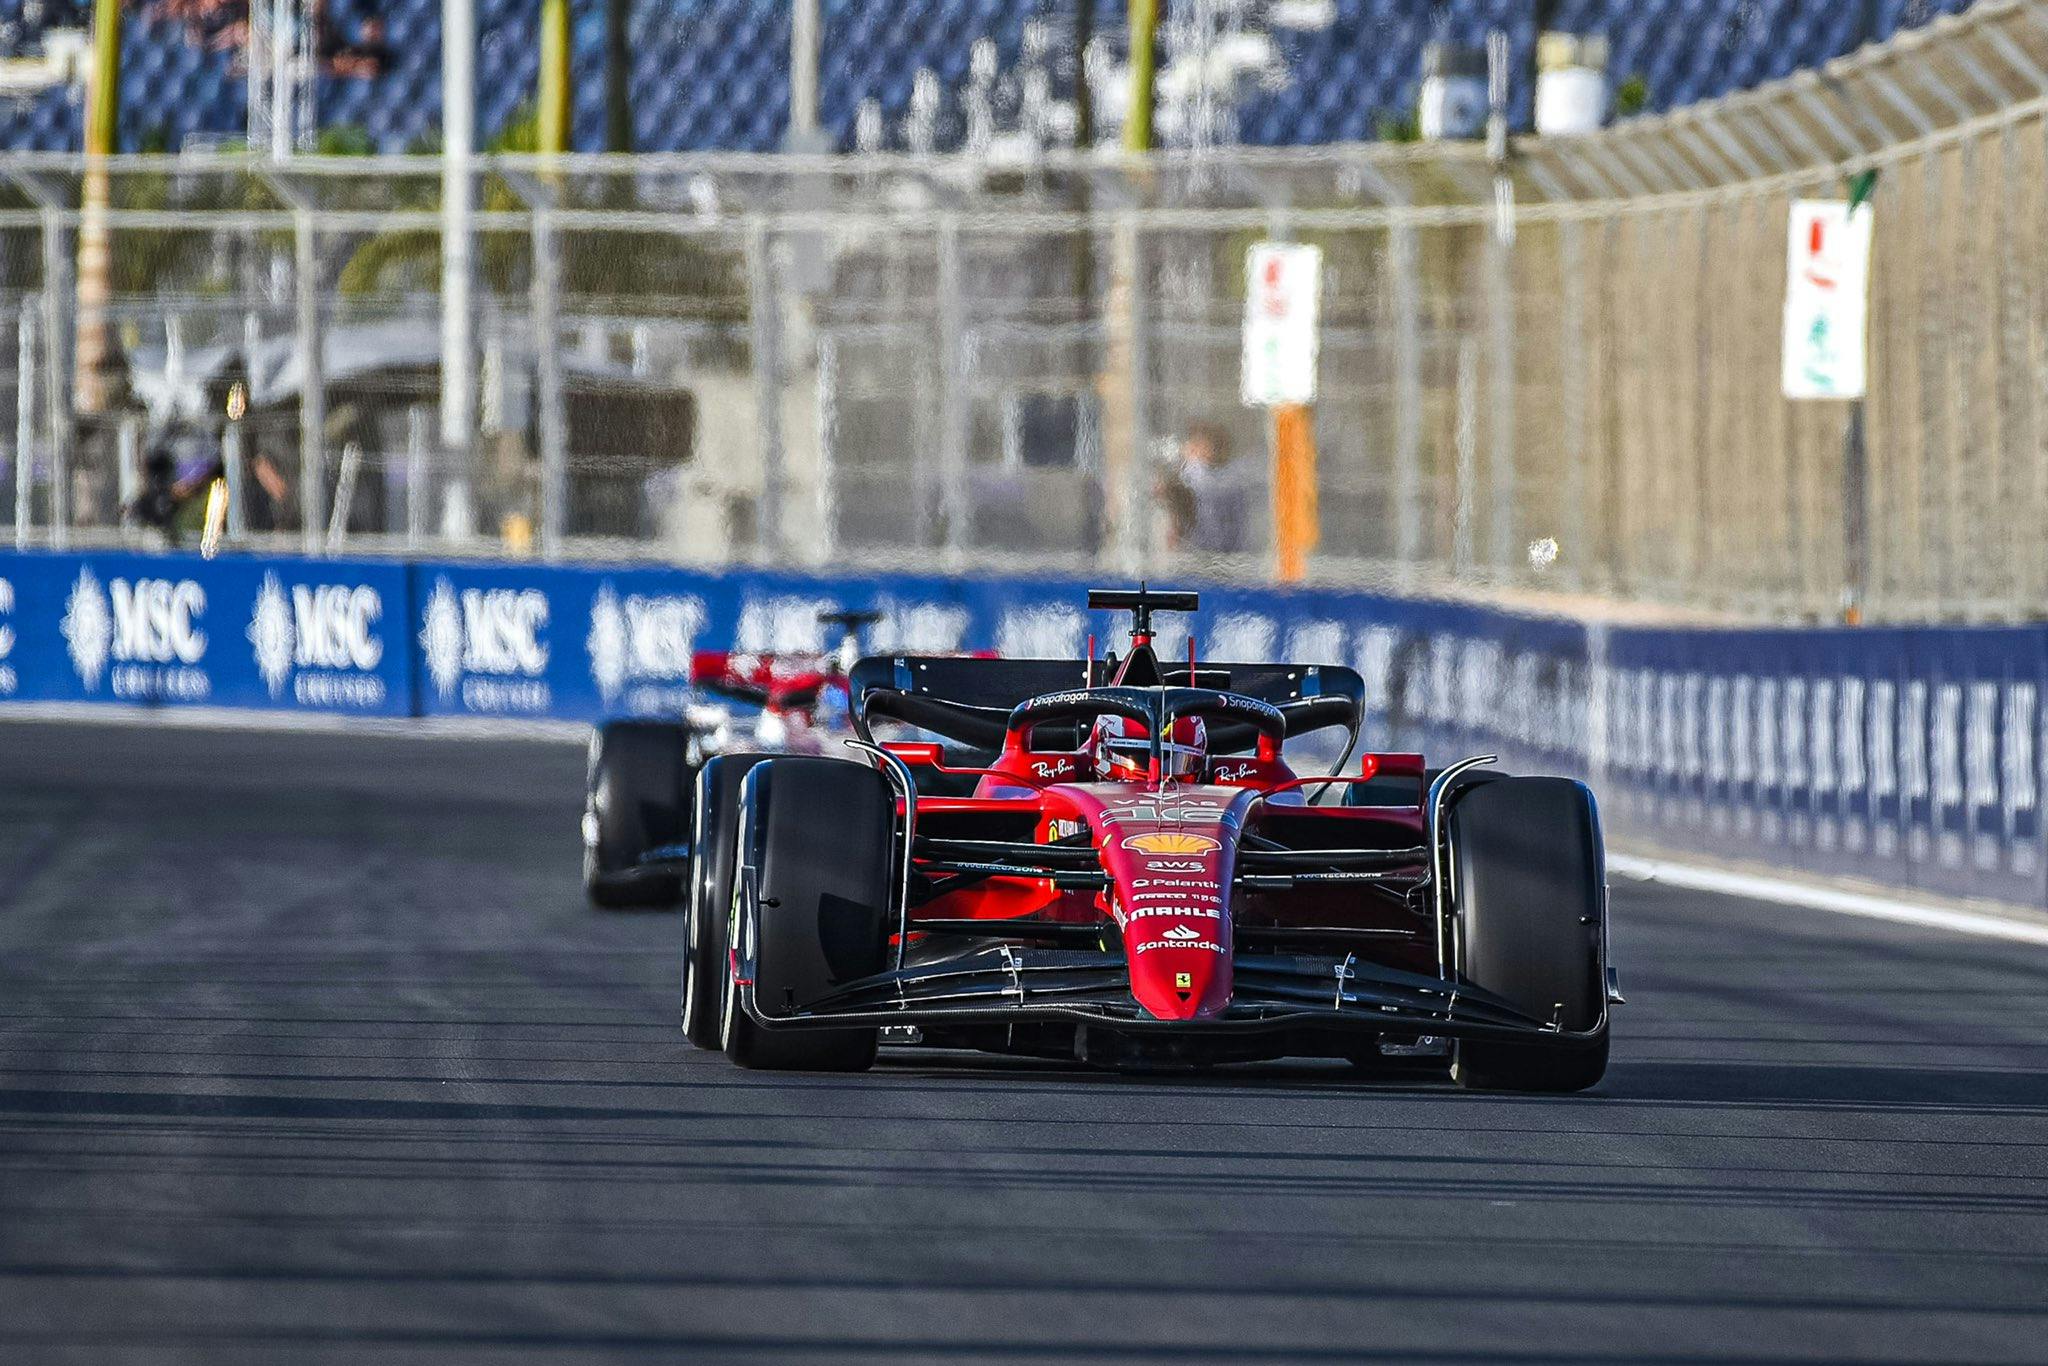 FP1: Kierowcy z problemami, mocni Leclerc i Verstappen